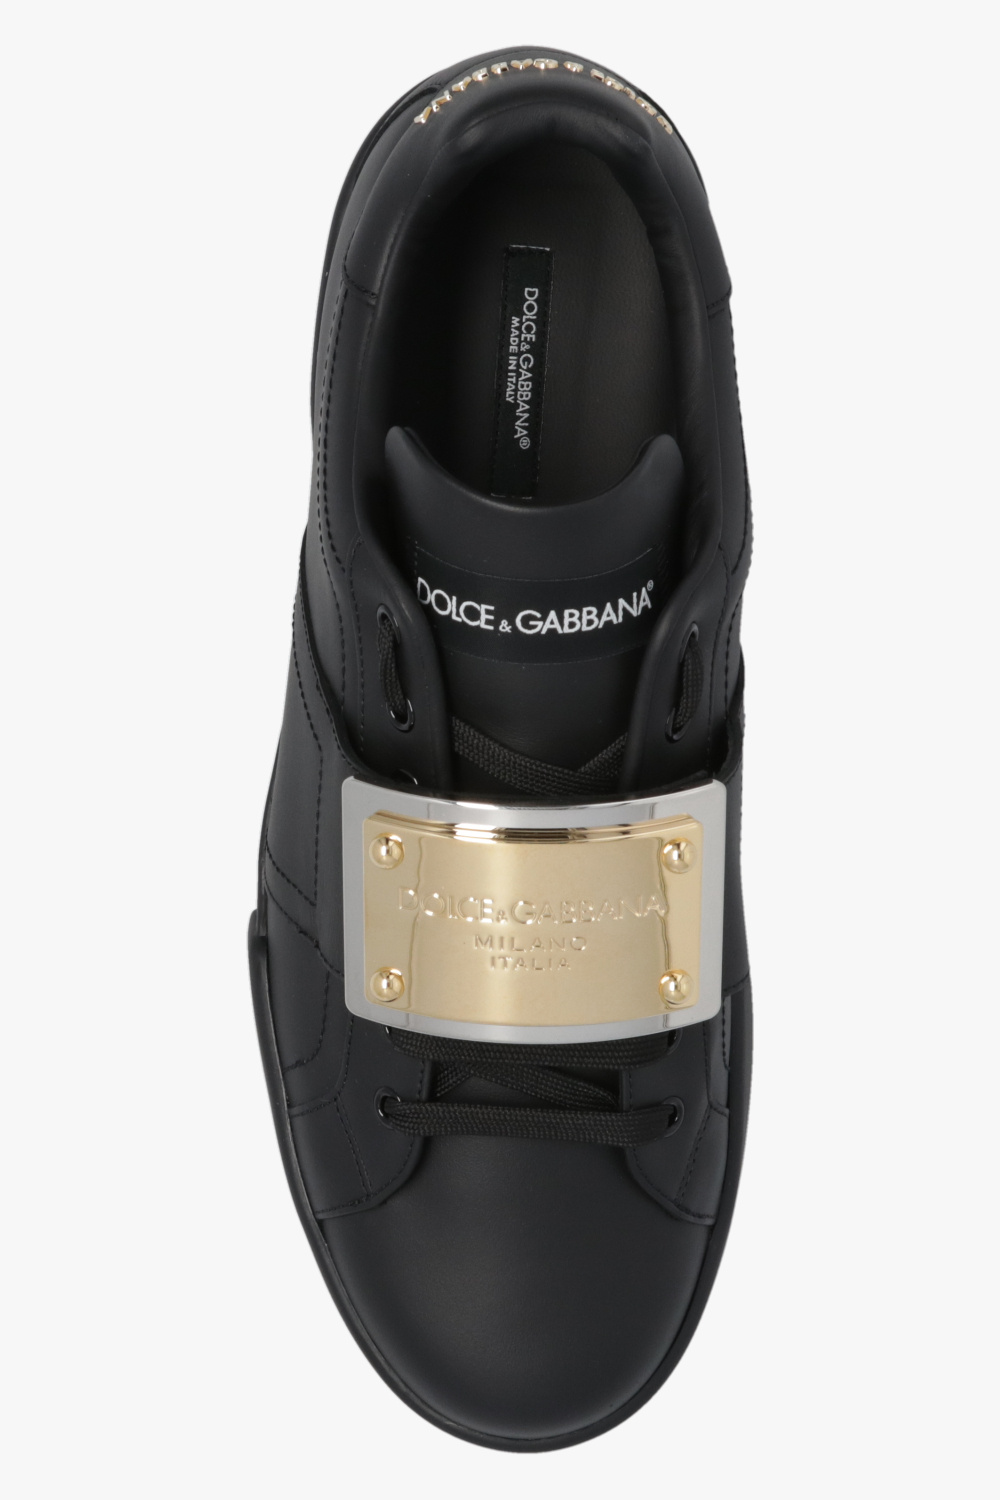 Dolce & Gabbana Eyewear logo-plaque chain detail sunglasses ‘Portofino’ sneakers